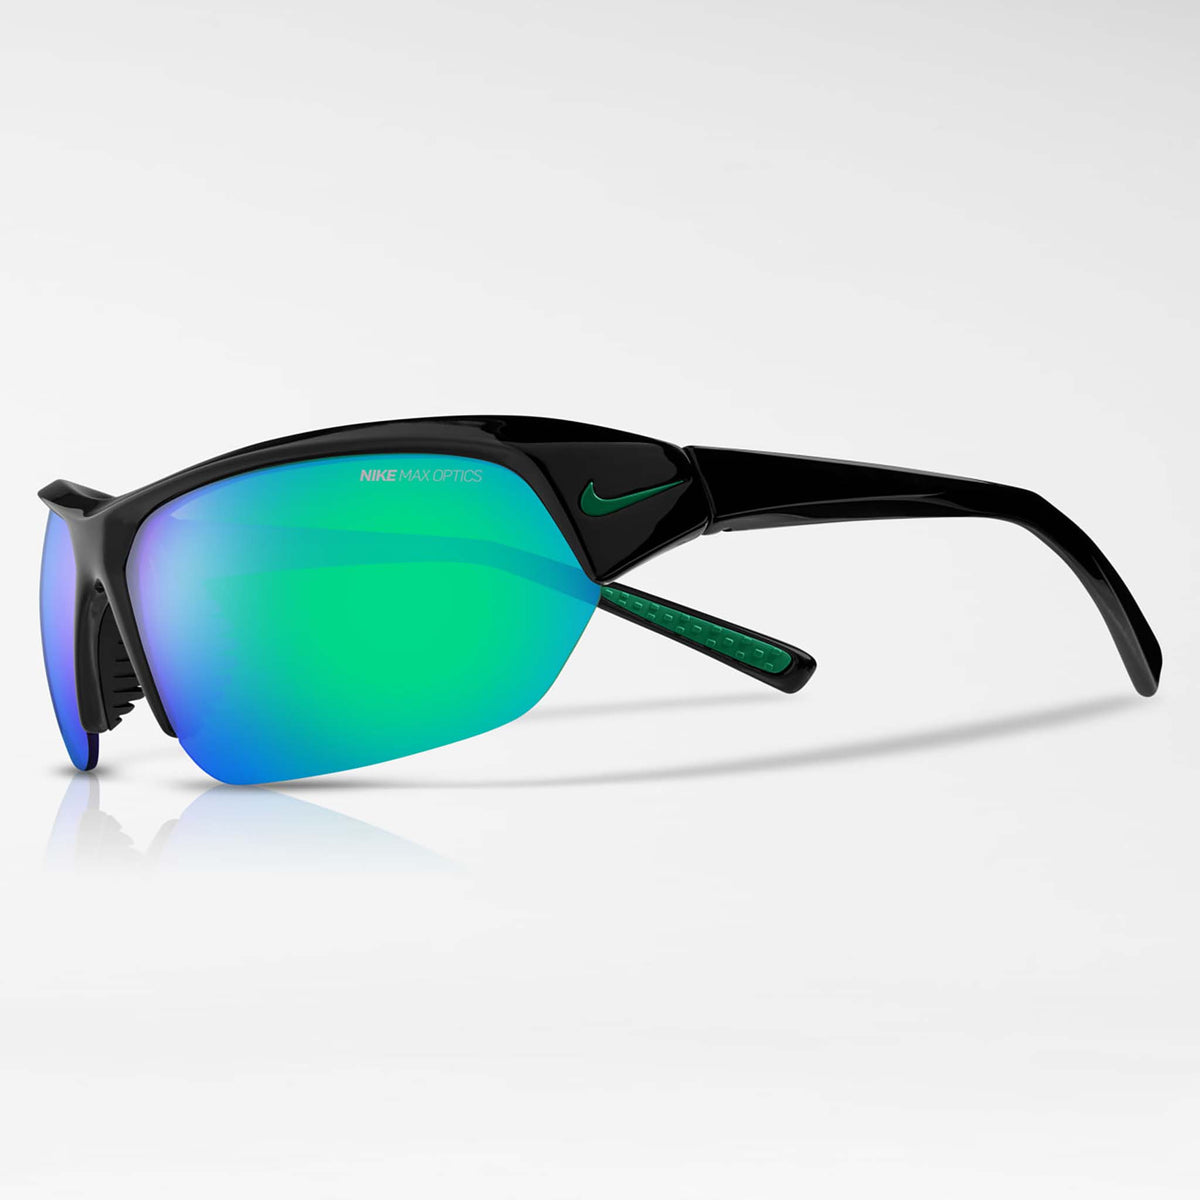 Nike Skylon Ace lunettes de soleil sport noir vert miroir lateral